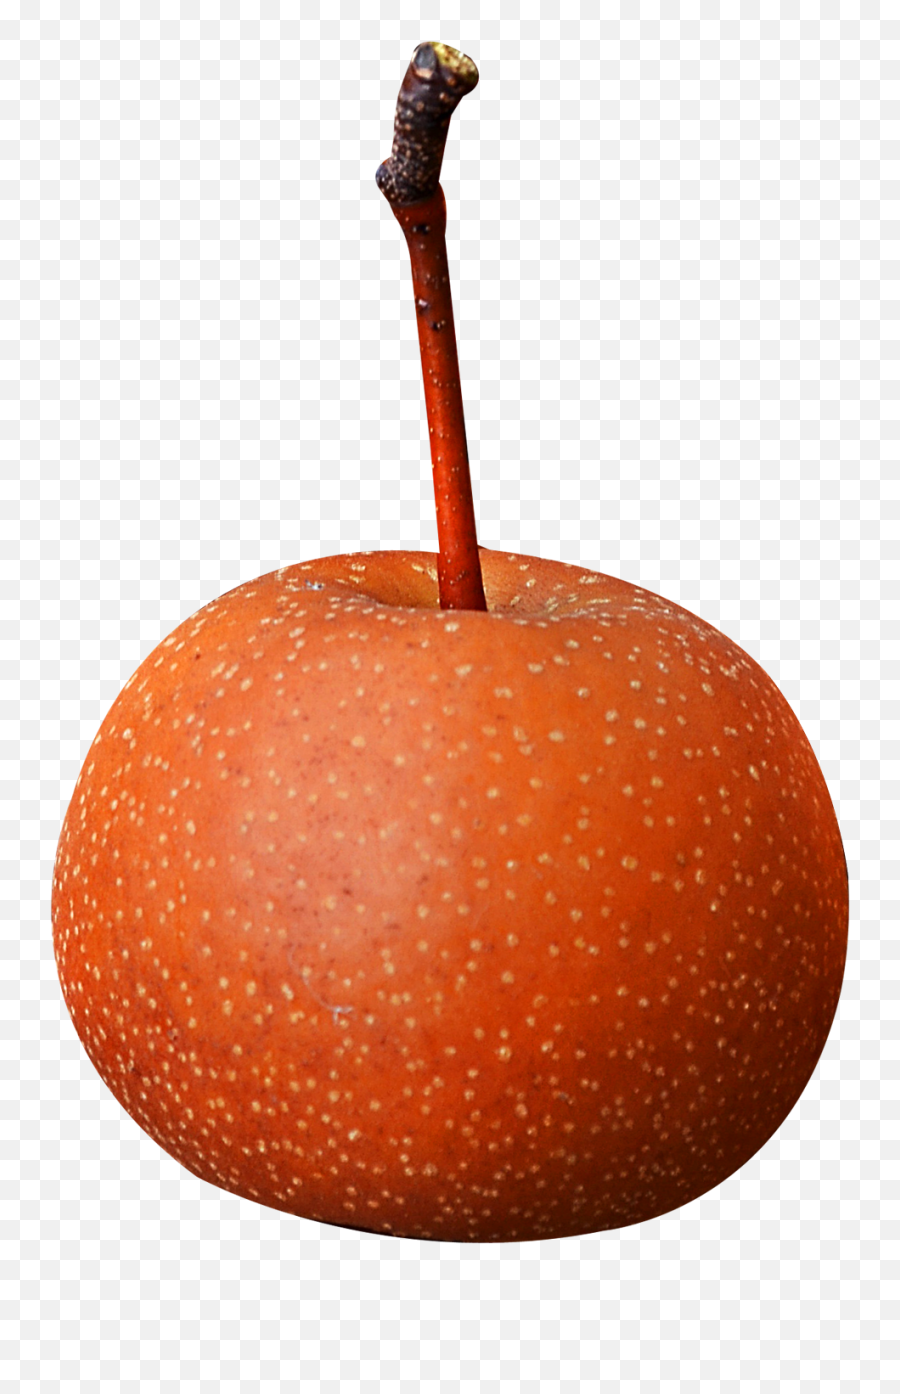 Asian Pear Fruit With Stem Png Image - Pngpix Emoji,Stem Png